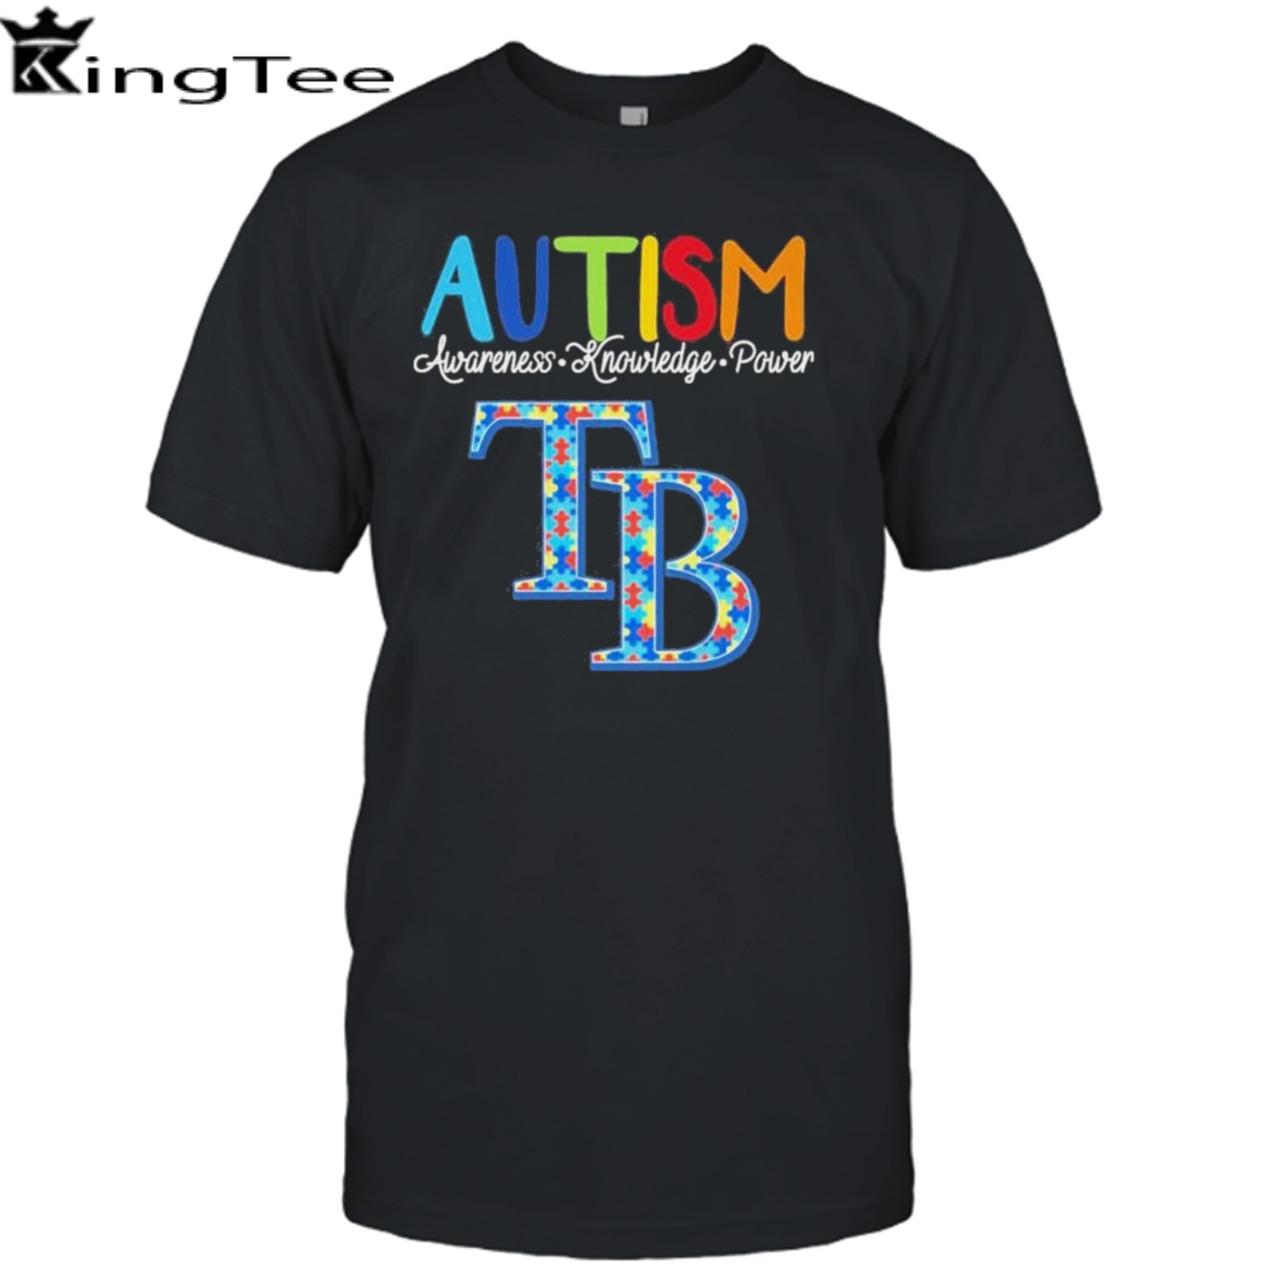 Tampa Bay Rays Autism Awareness Knowledge Power shirt